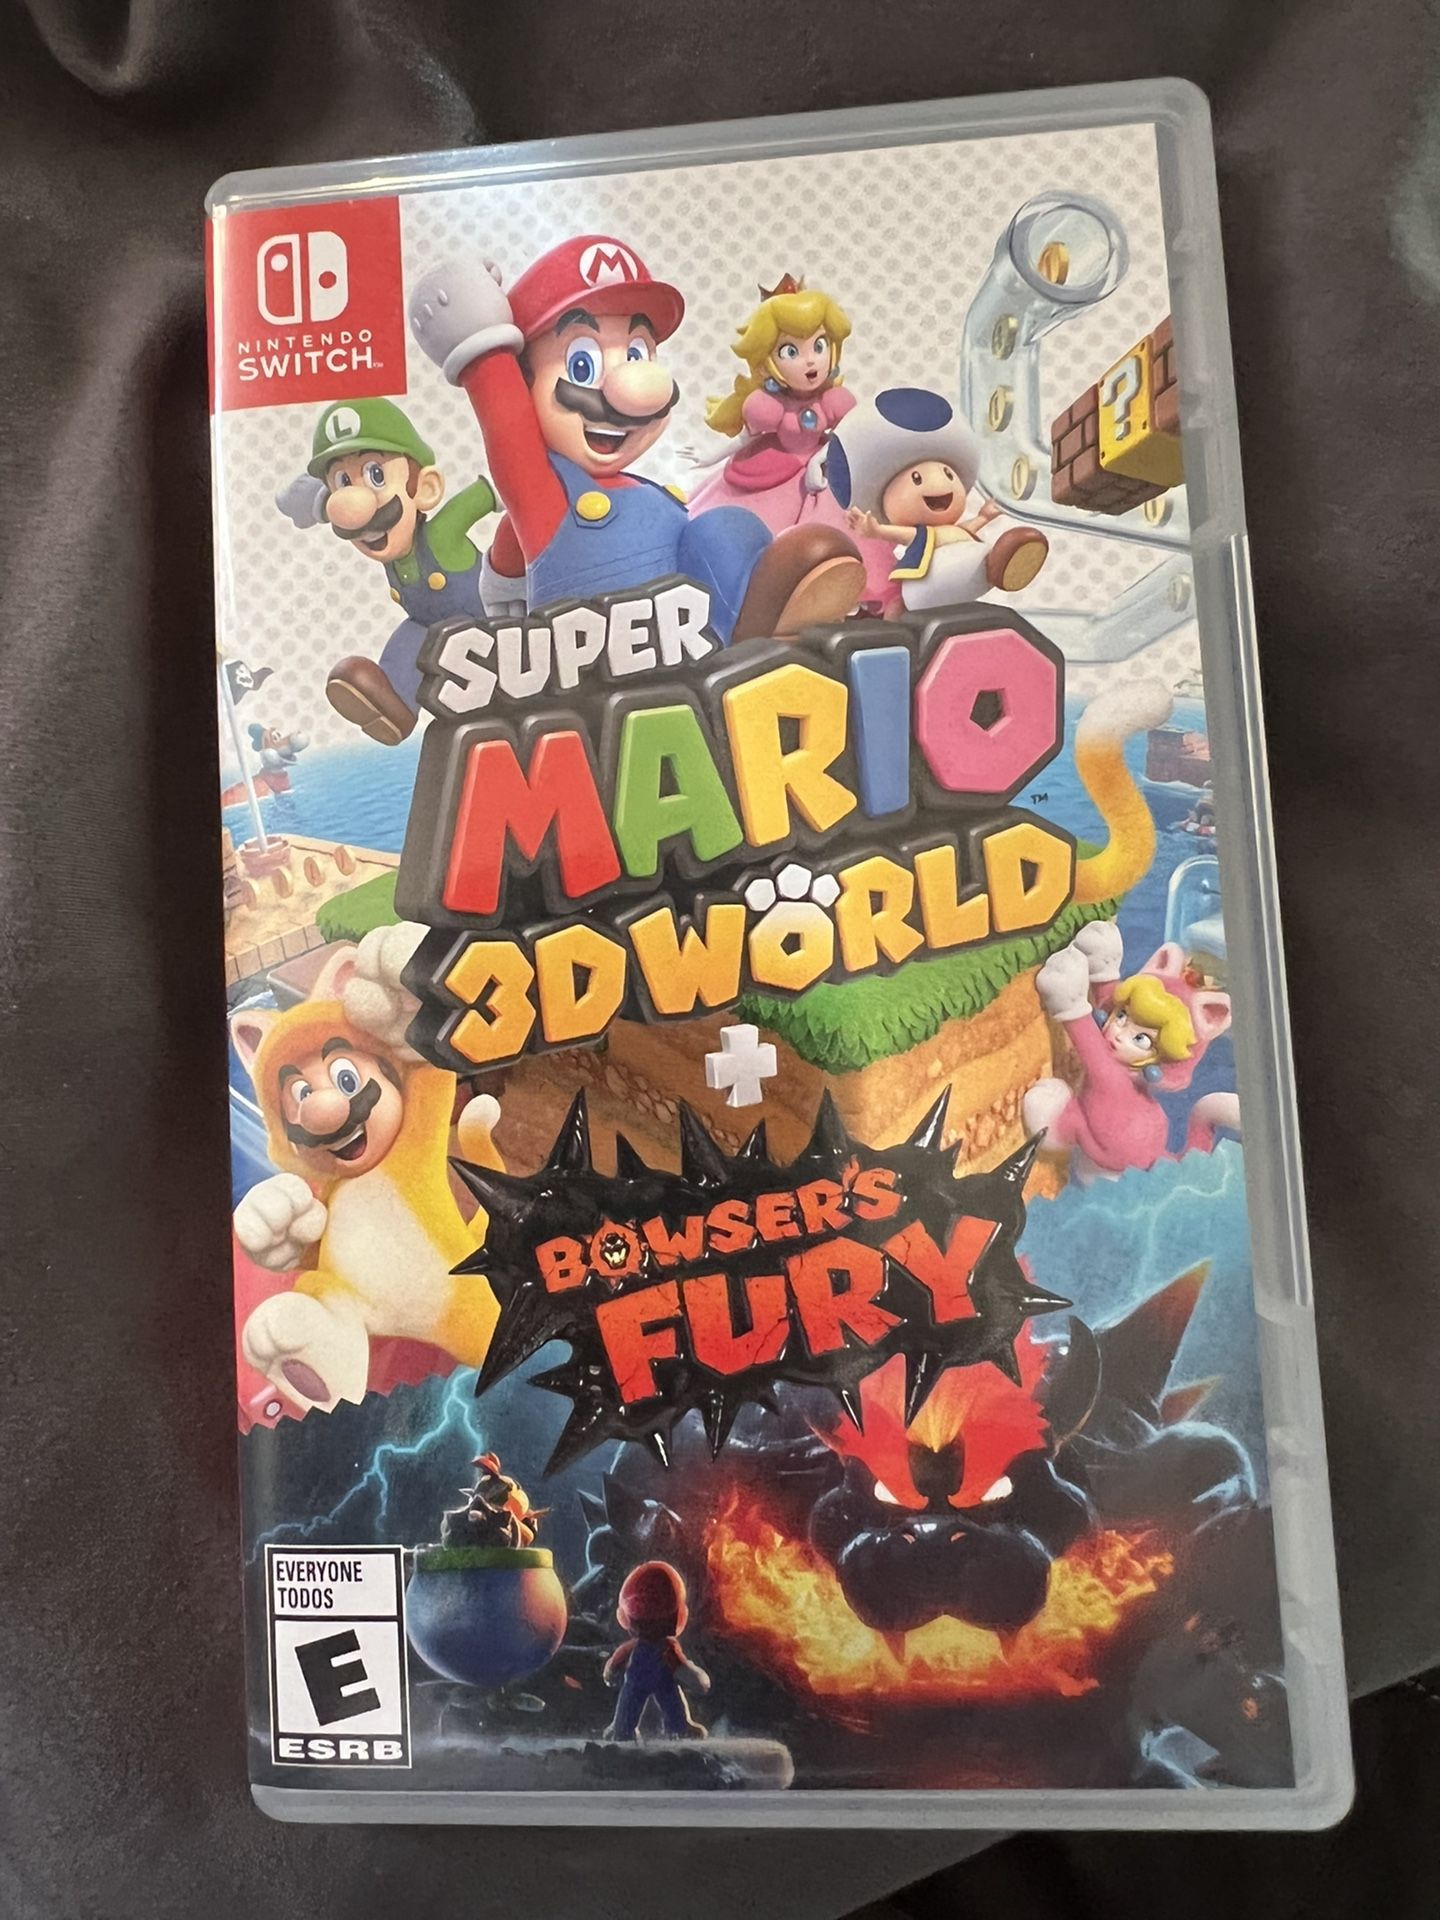 Super Mario 3D World + Bowsers Fury (Trade)